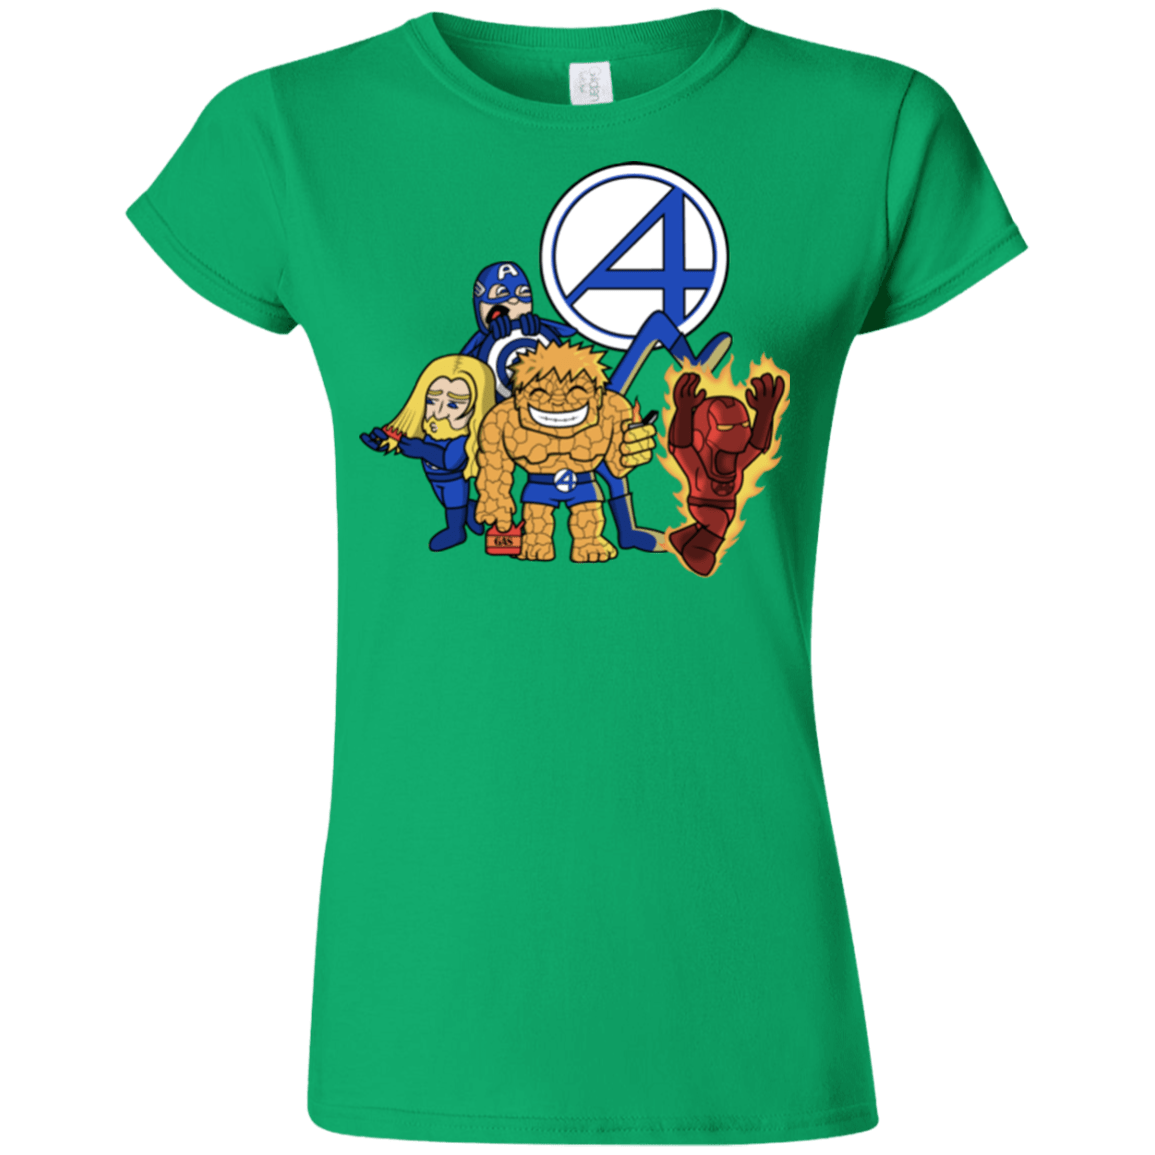 T-Shirts Irish Green / S FANTASTIC-A Junior Slimmer-Fit T-Shirt